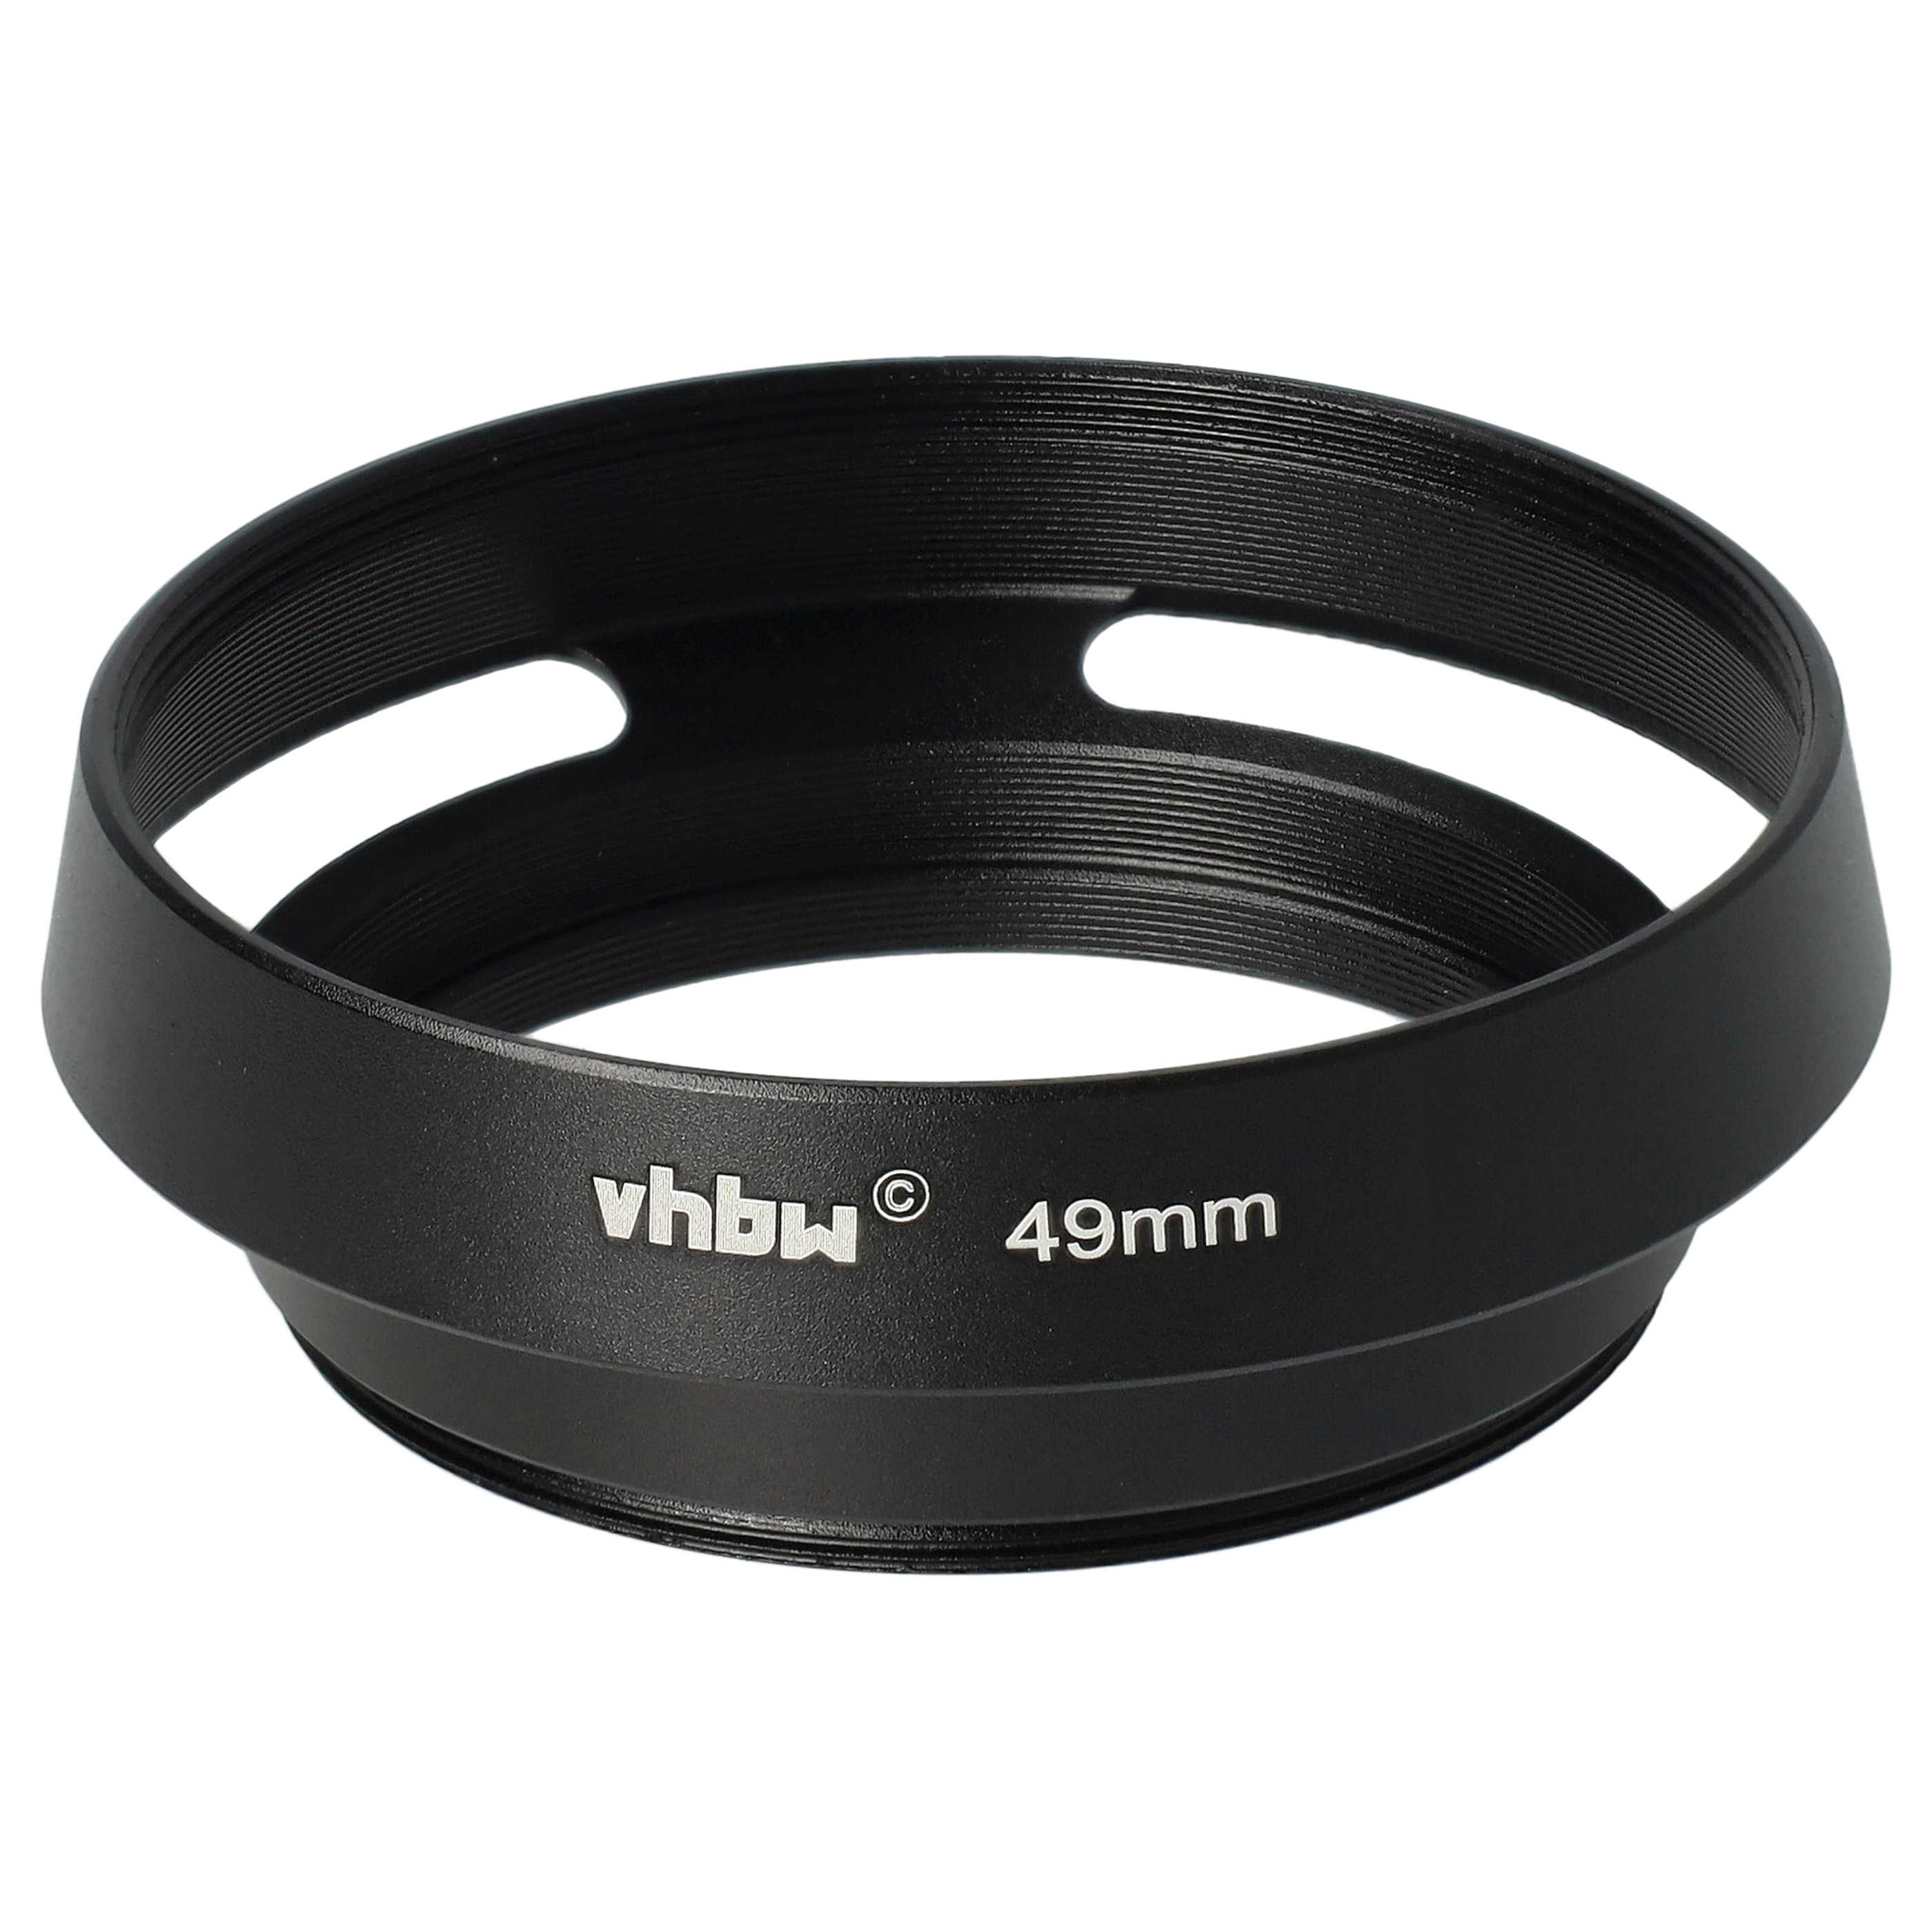 Lens Hood suitable for 49mm Lens - Lens Shade Black, Round